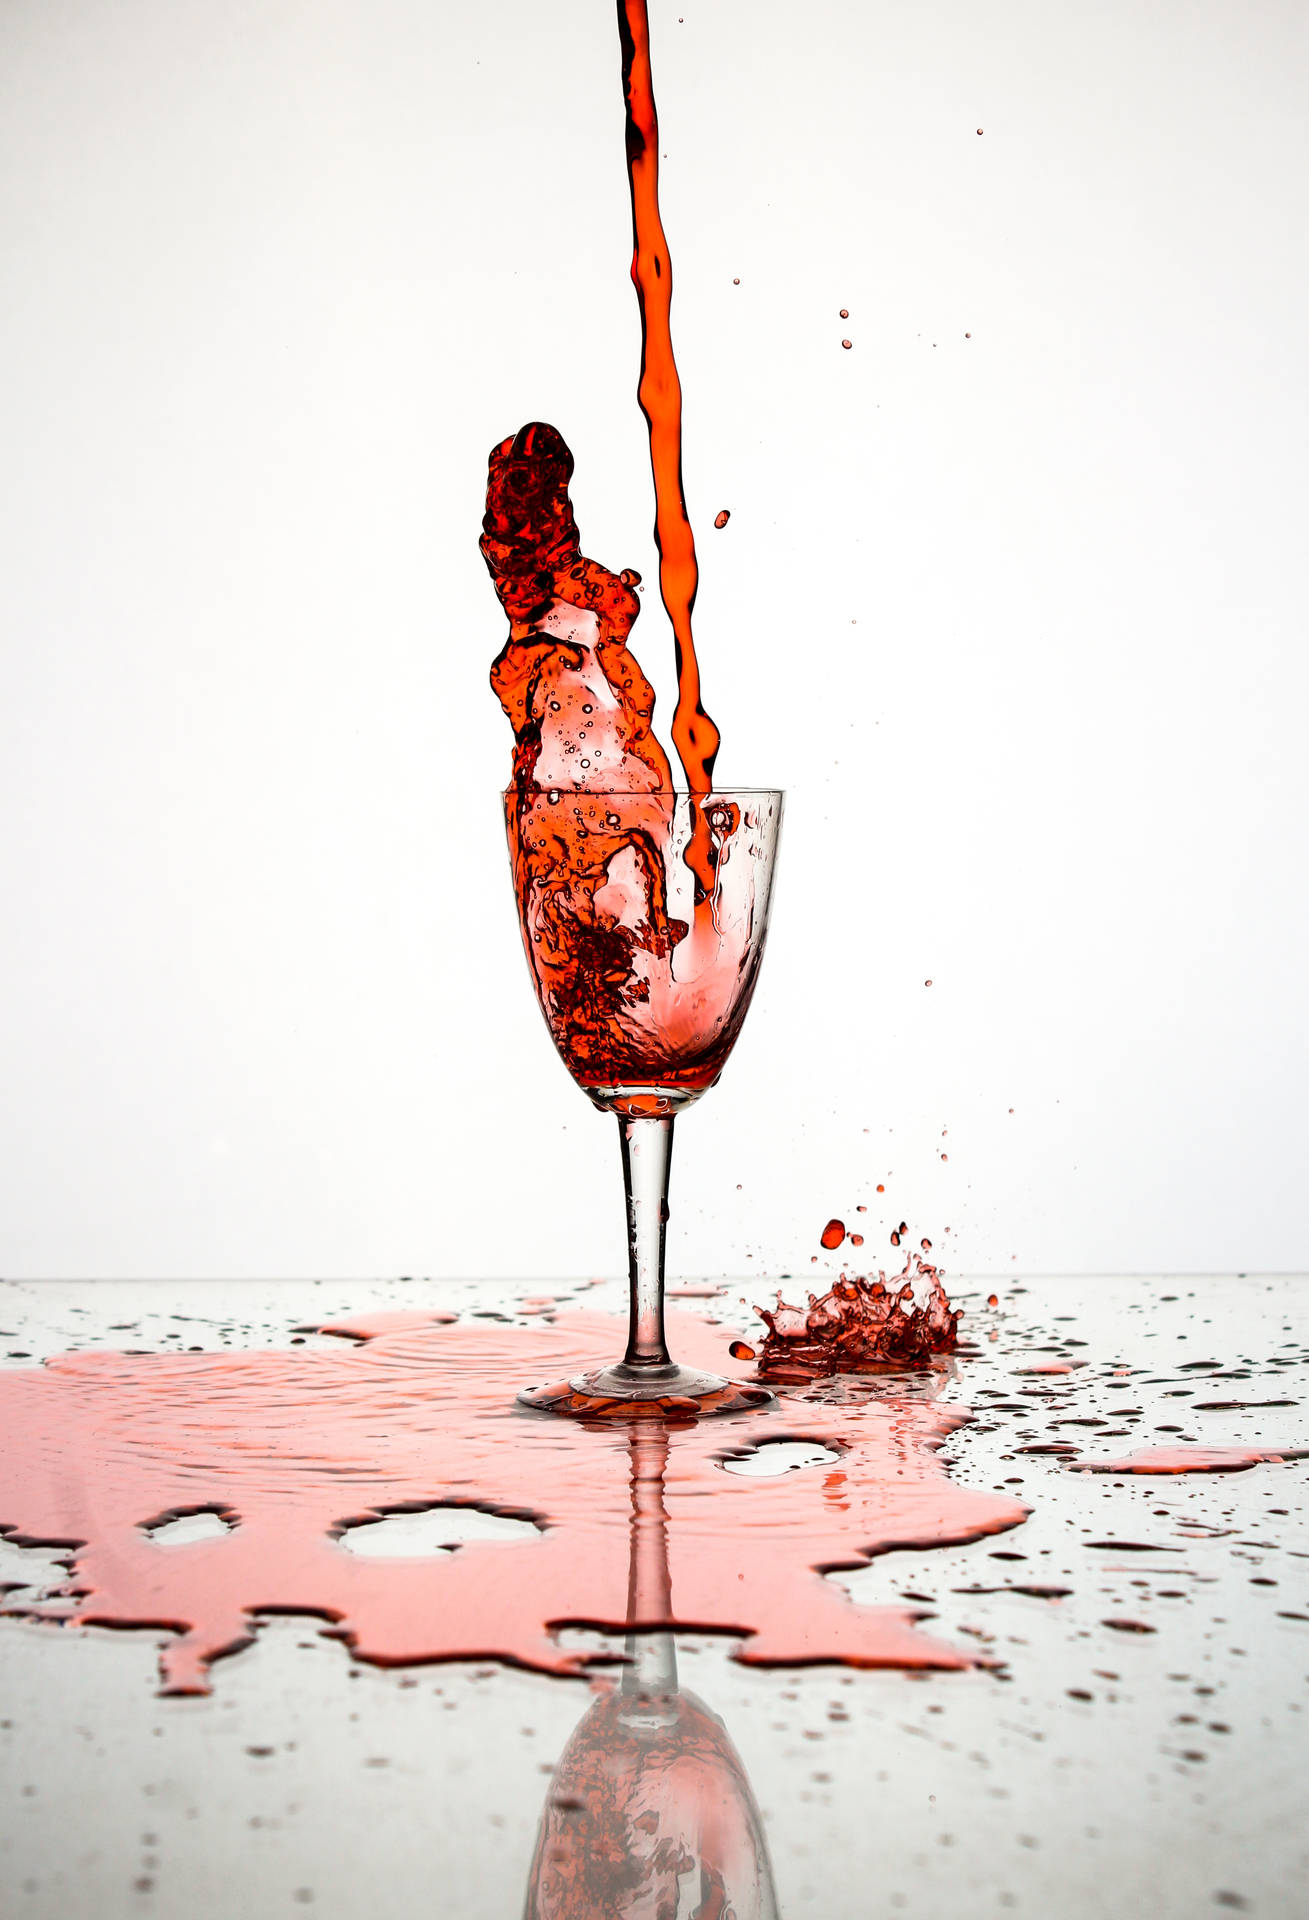 Red Wine Splatters Background